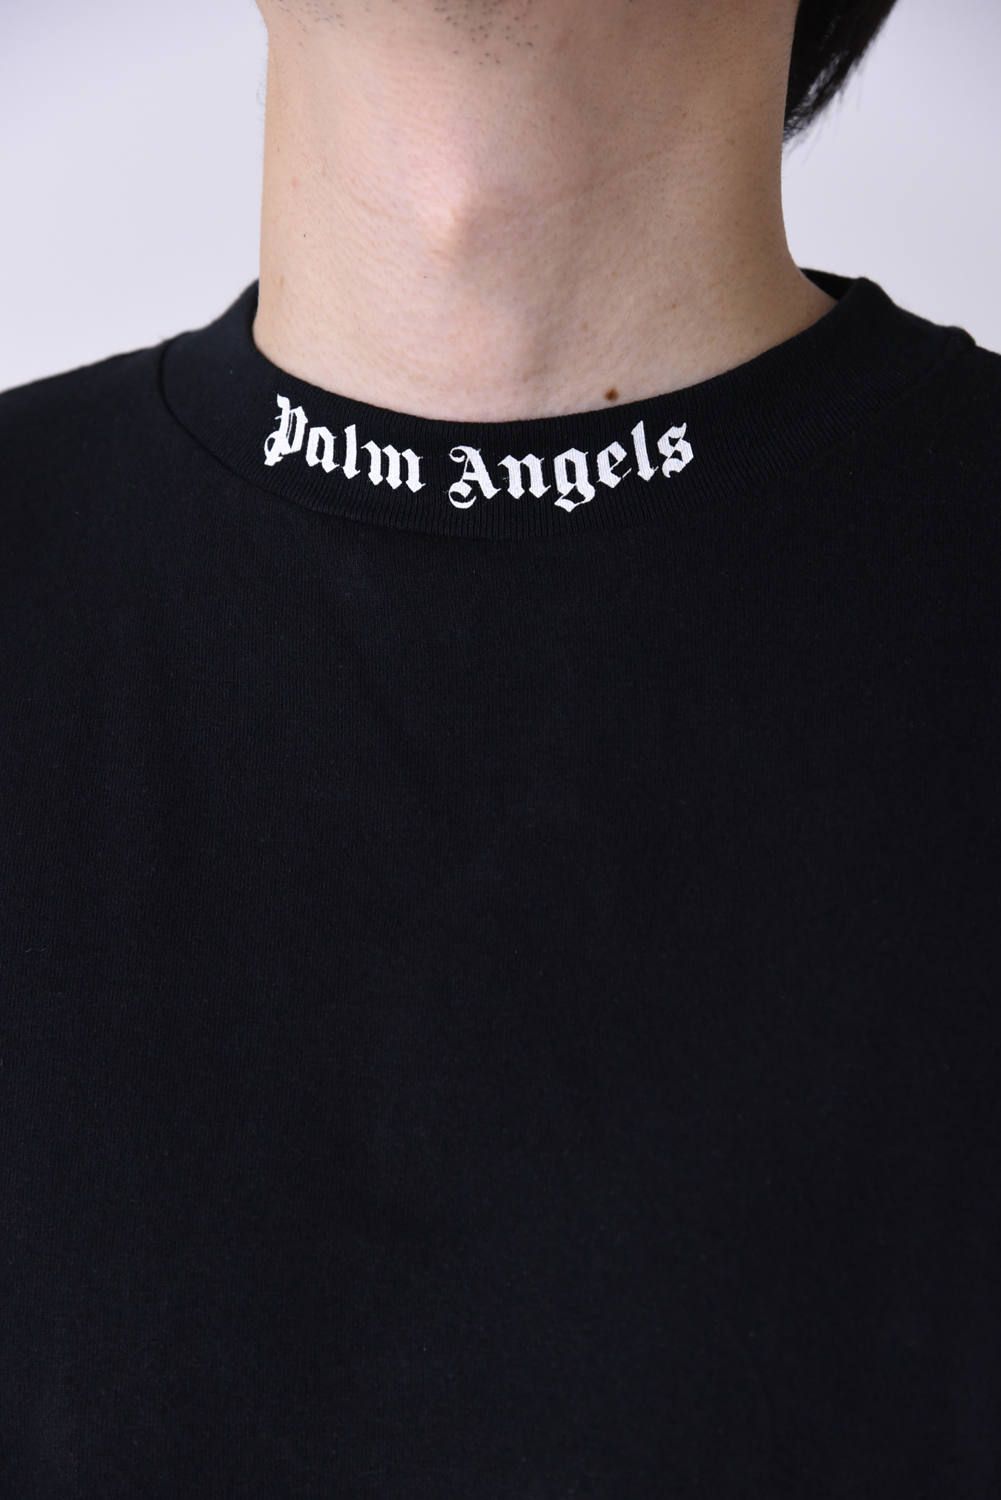 PALM ANGELS - LOGO L/S T-SHIRT / バックプリント クルーネック ロングスリーブTシャツ ブラック | gossip